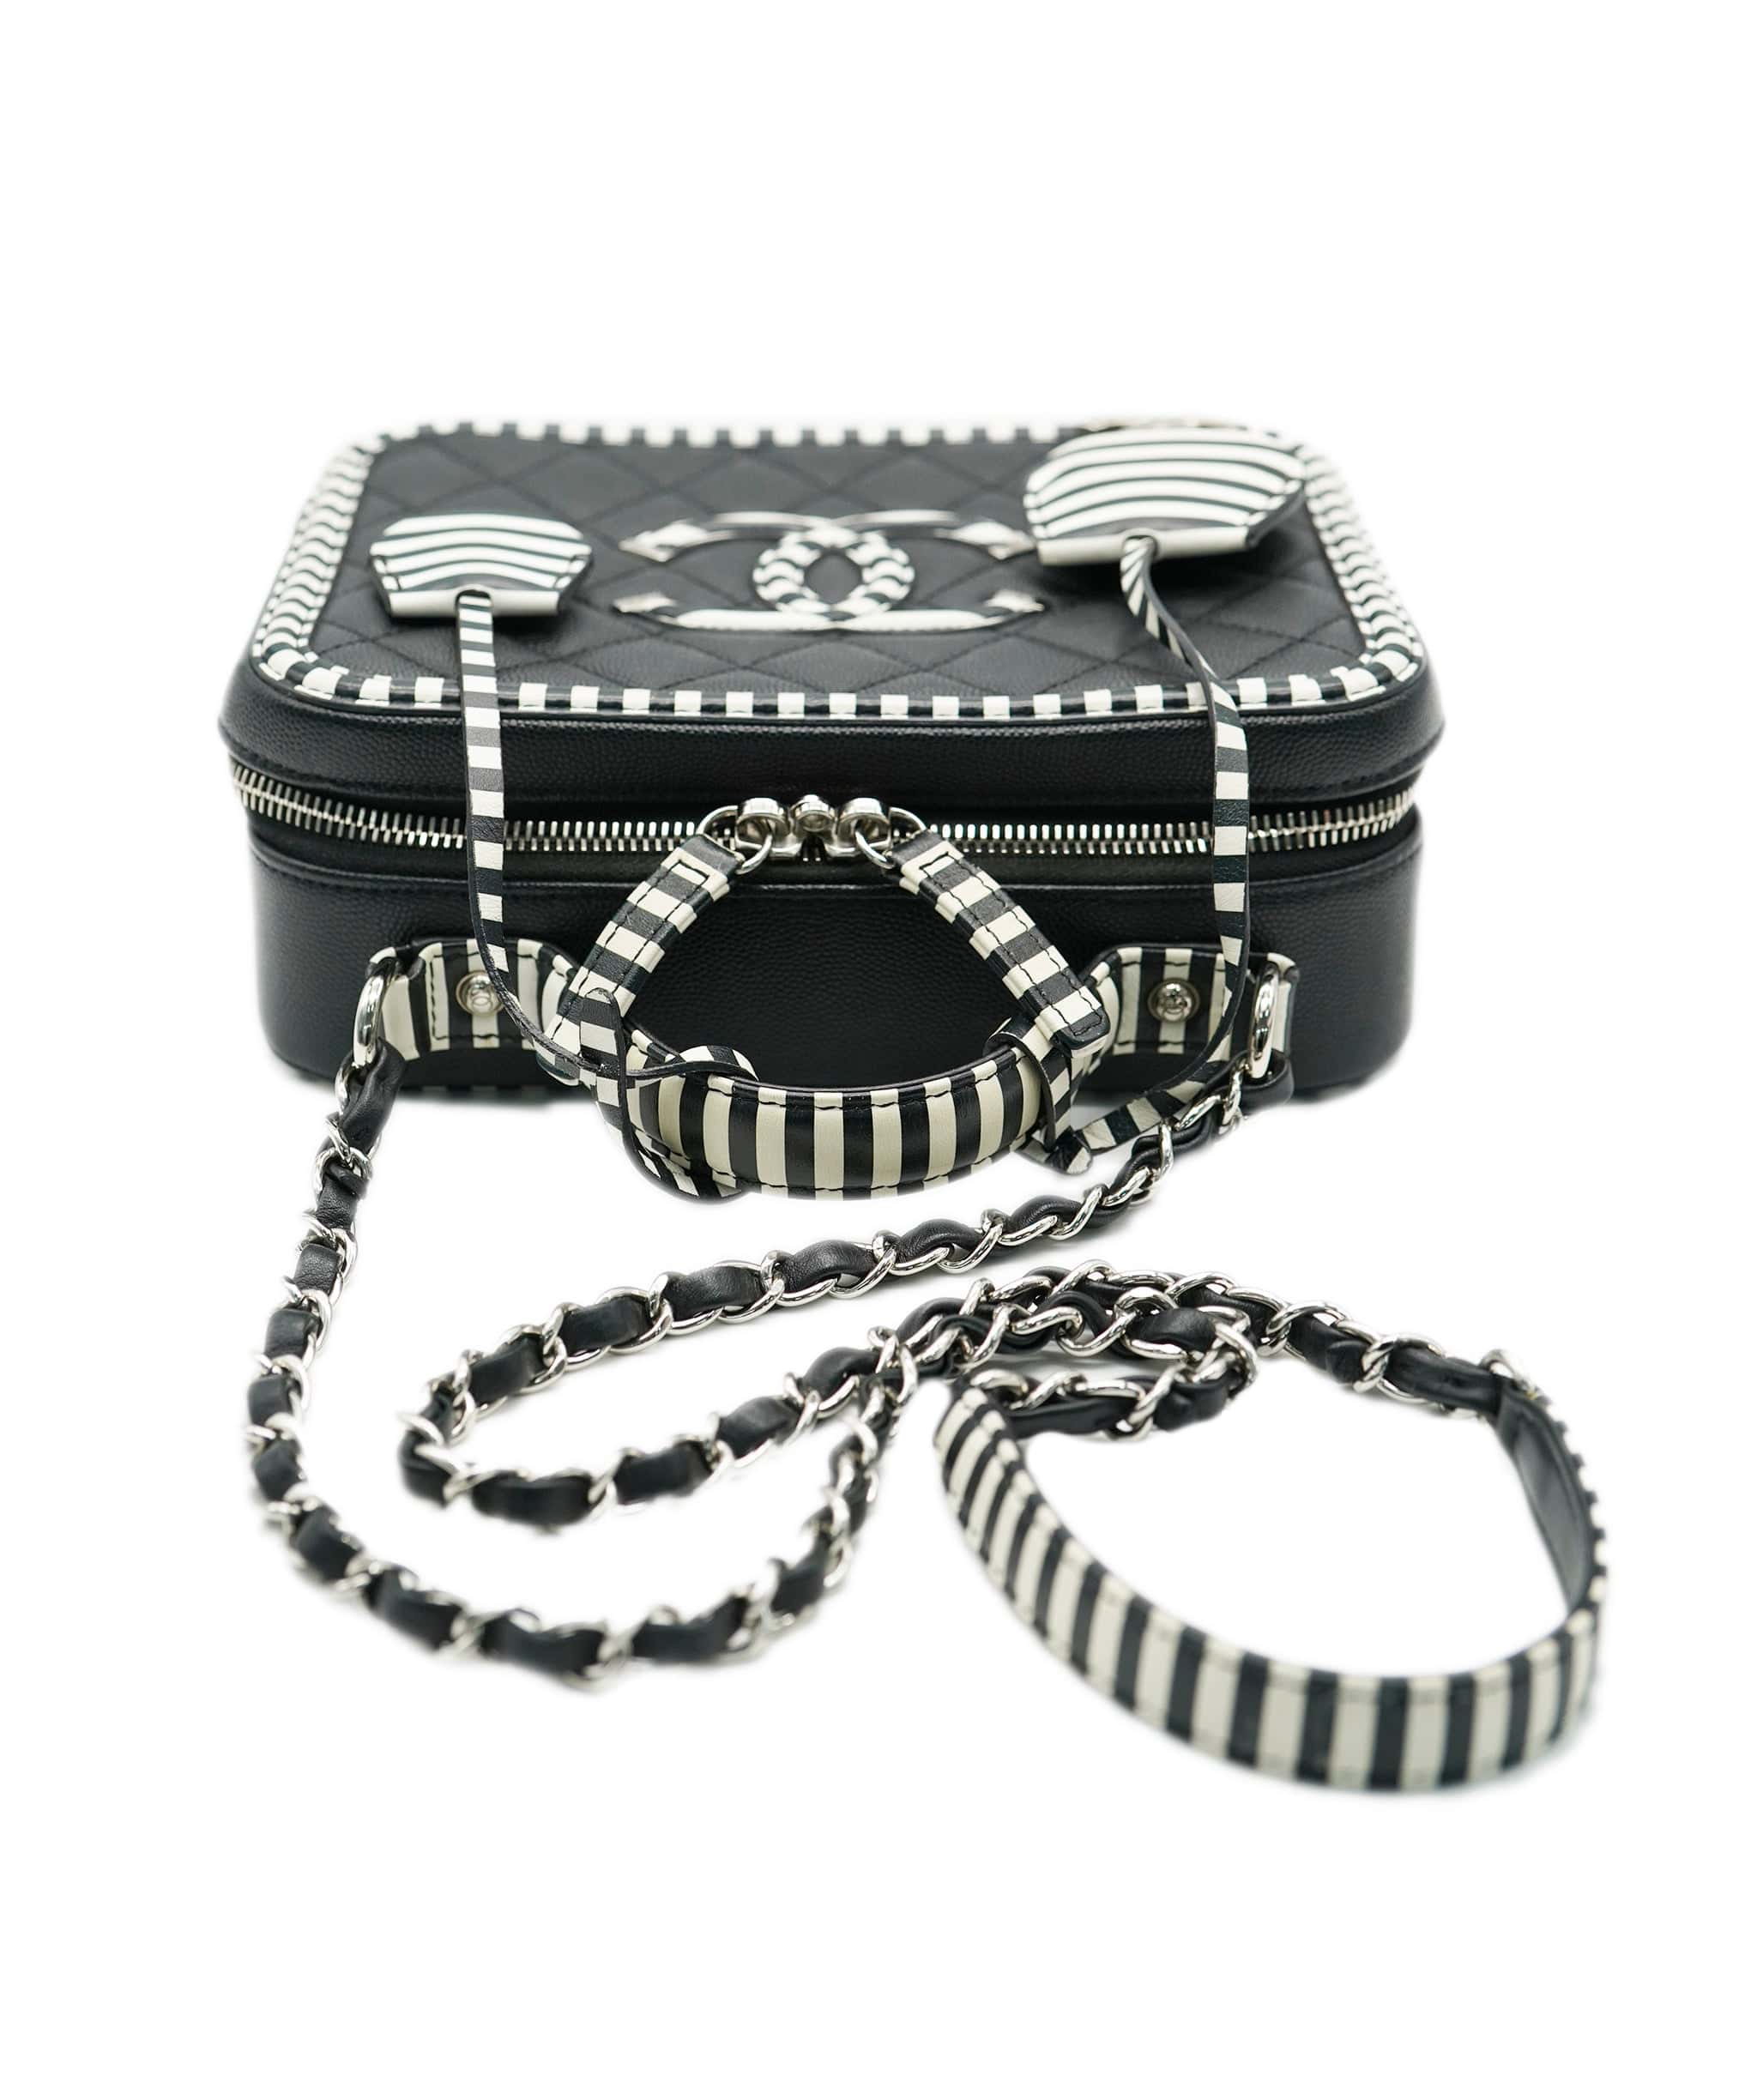 Chanel Chanel vanity box bag black and white stripes AVC1958